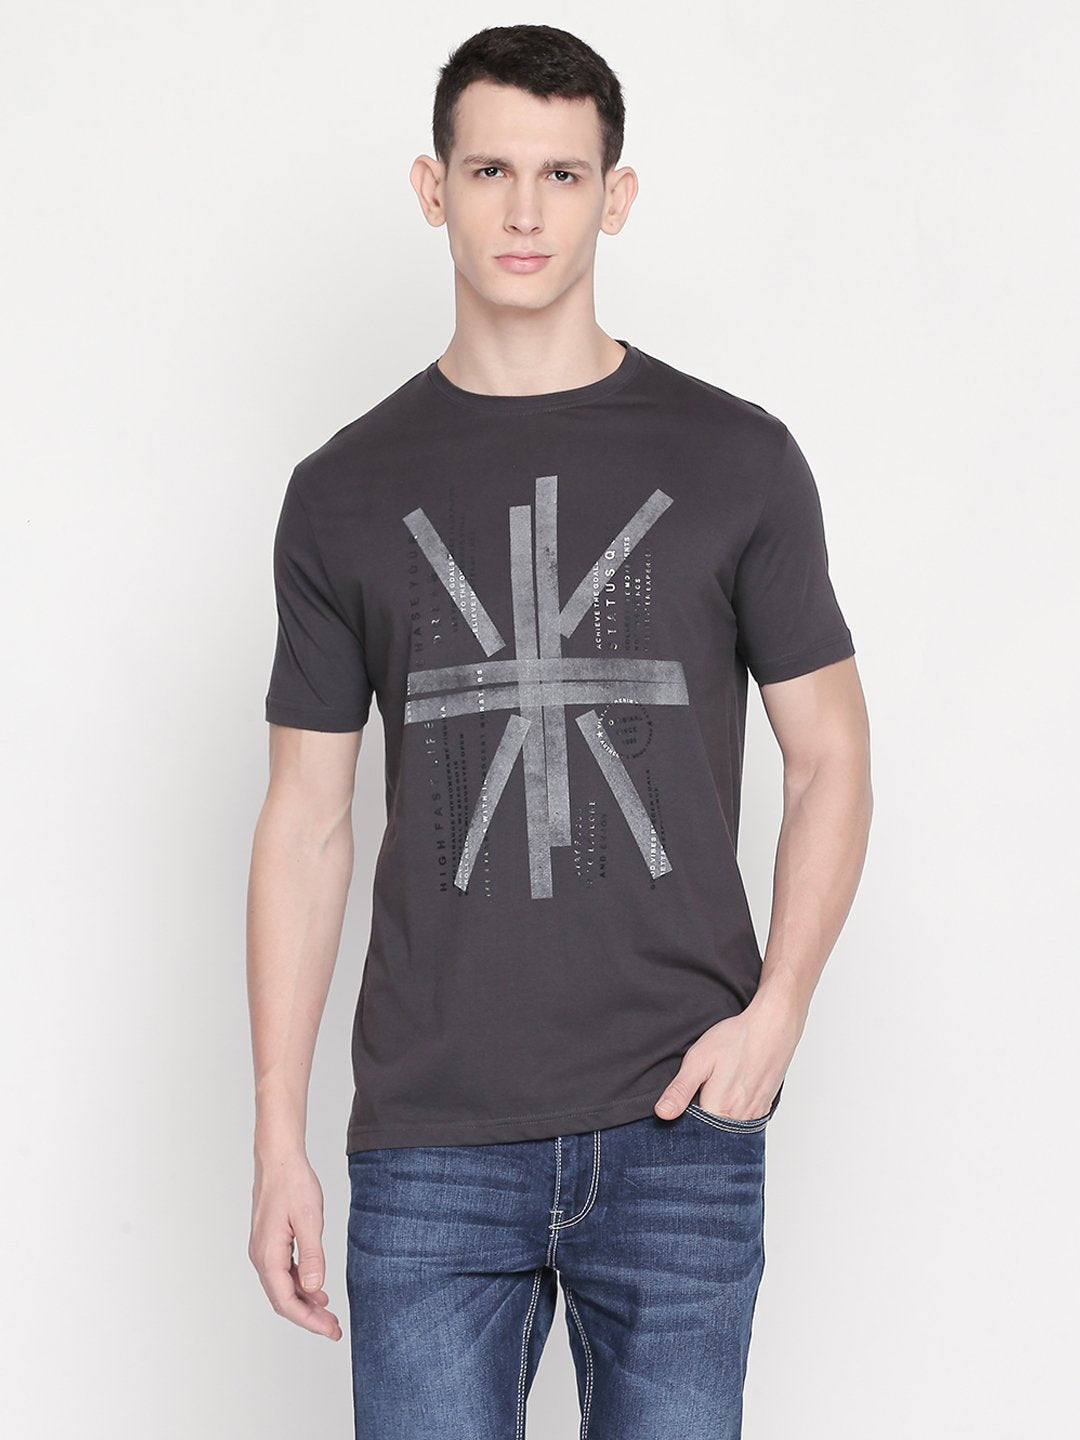 Status Quo |Round Neck T Shirt - M, L, XL, XXL